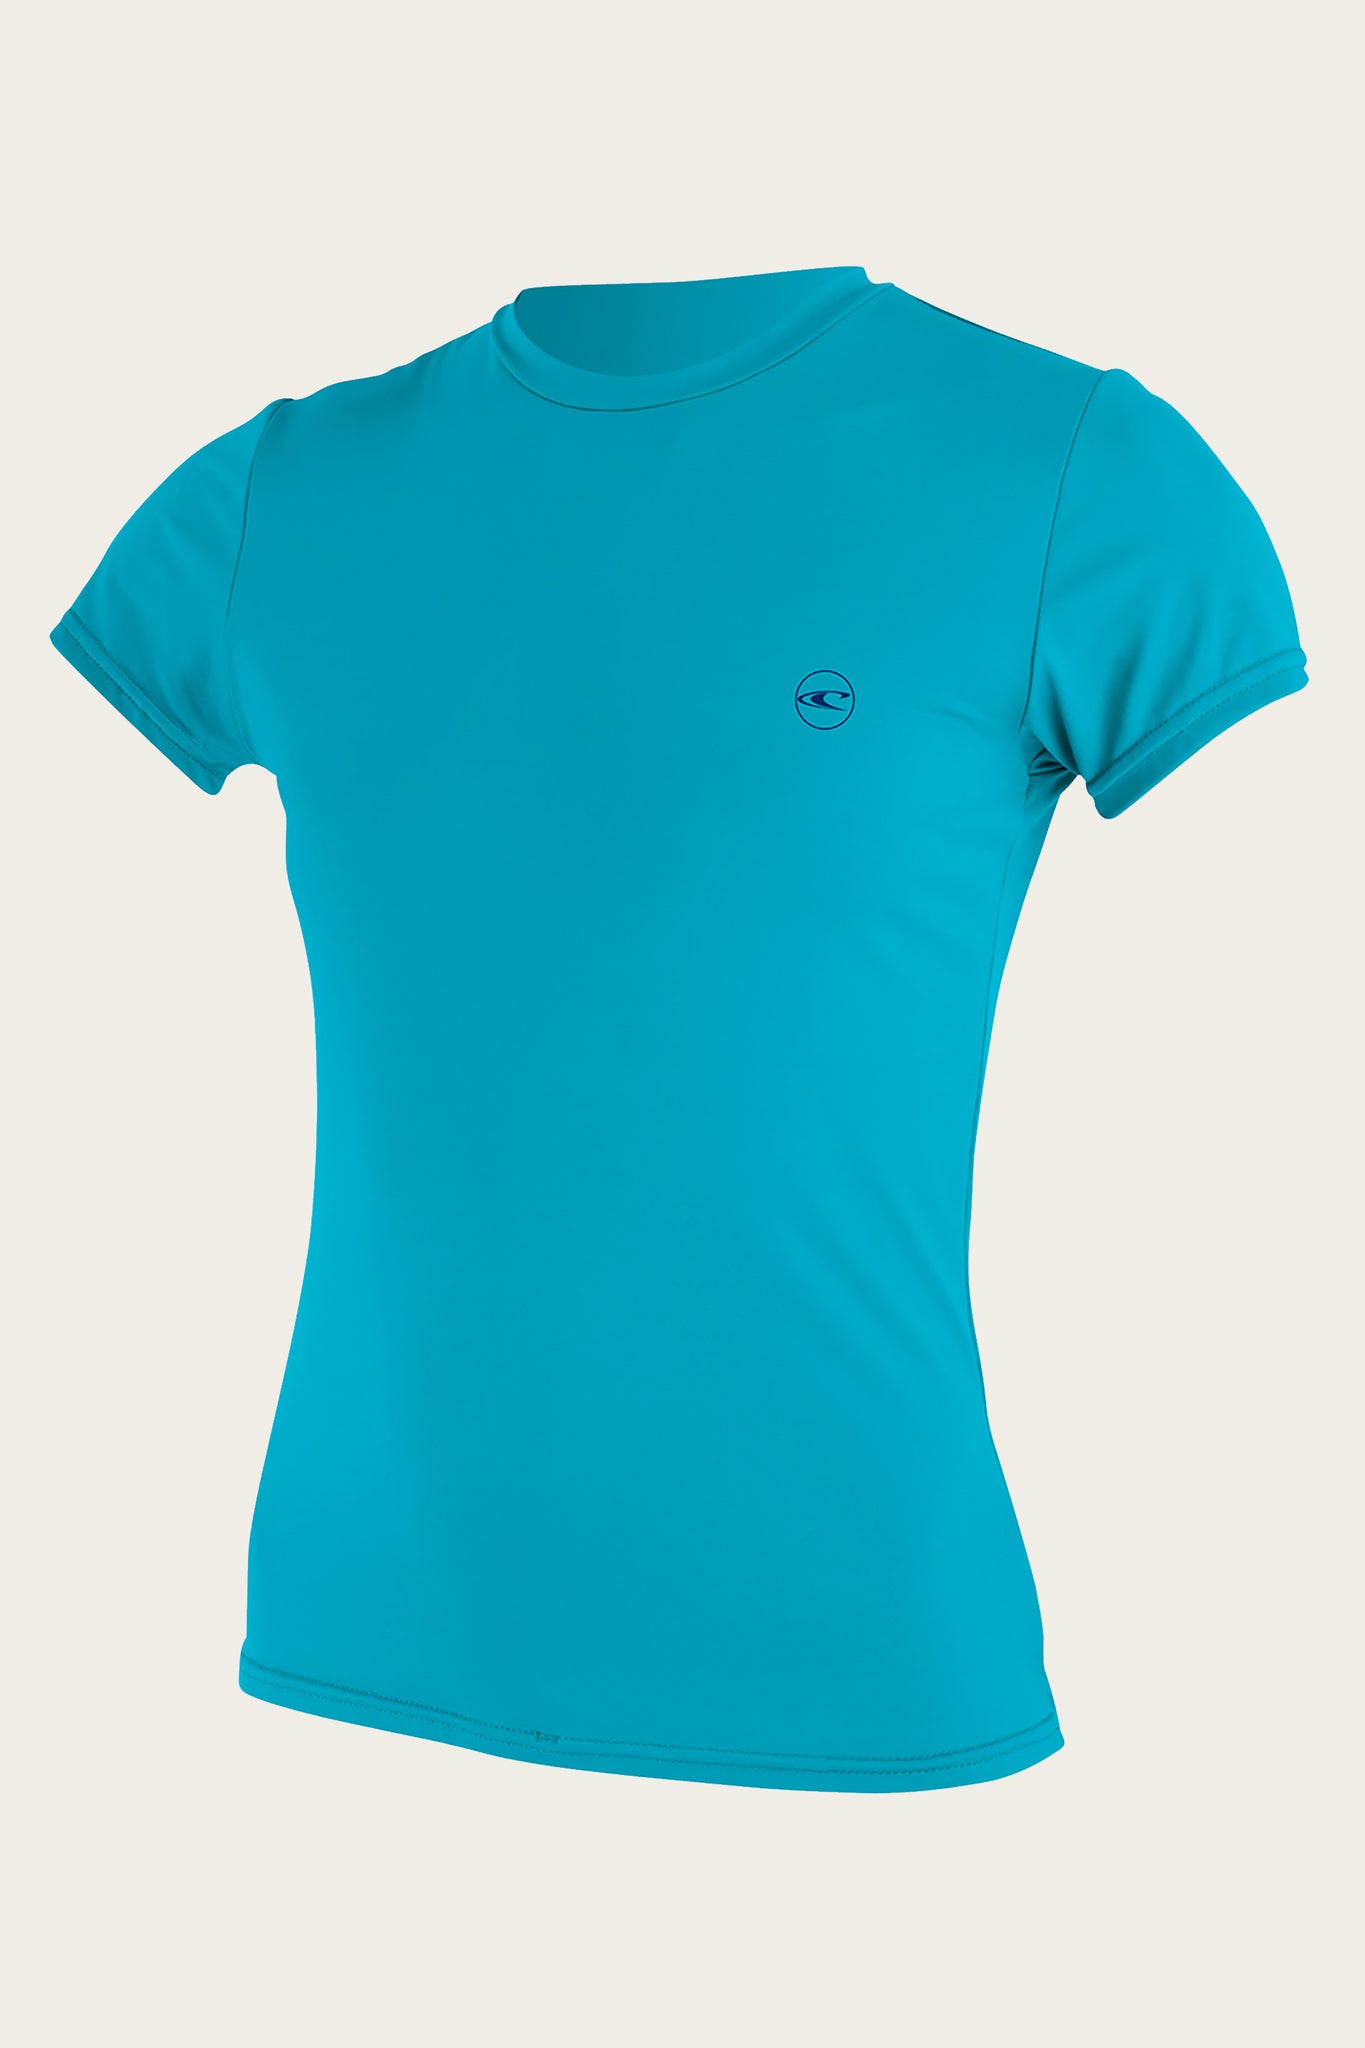 Women's Basic 30+ S/S Sun Shirt - Turquoise | O'Neill